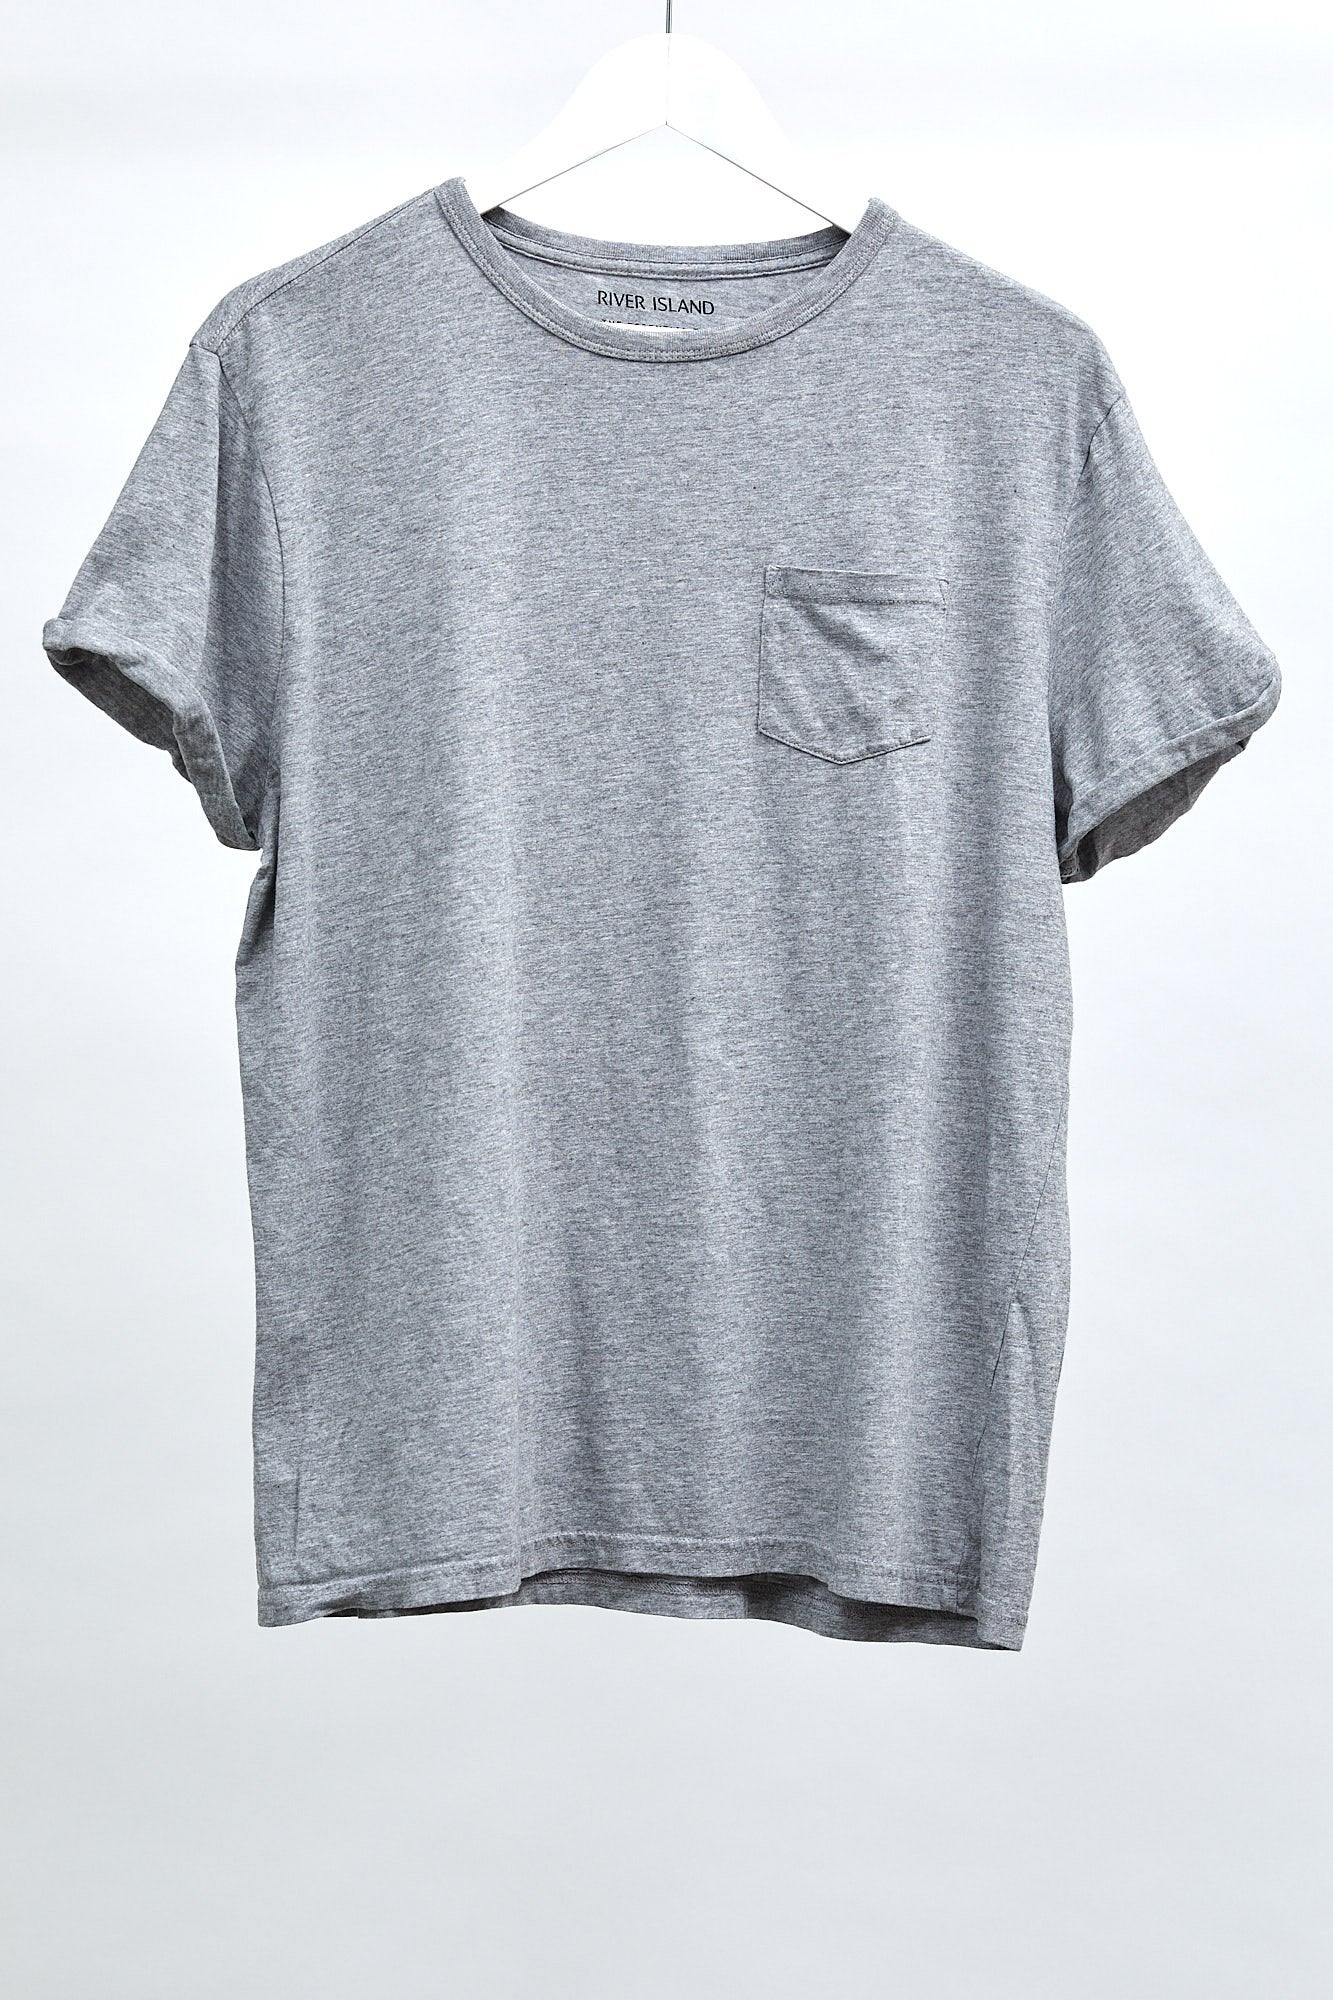 Mens River Island Light Grey T-Shirt: Size Large